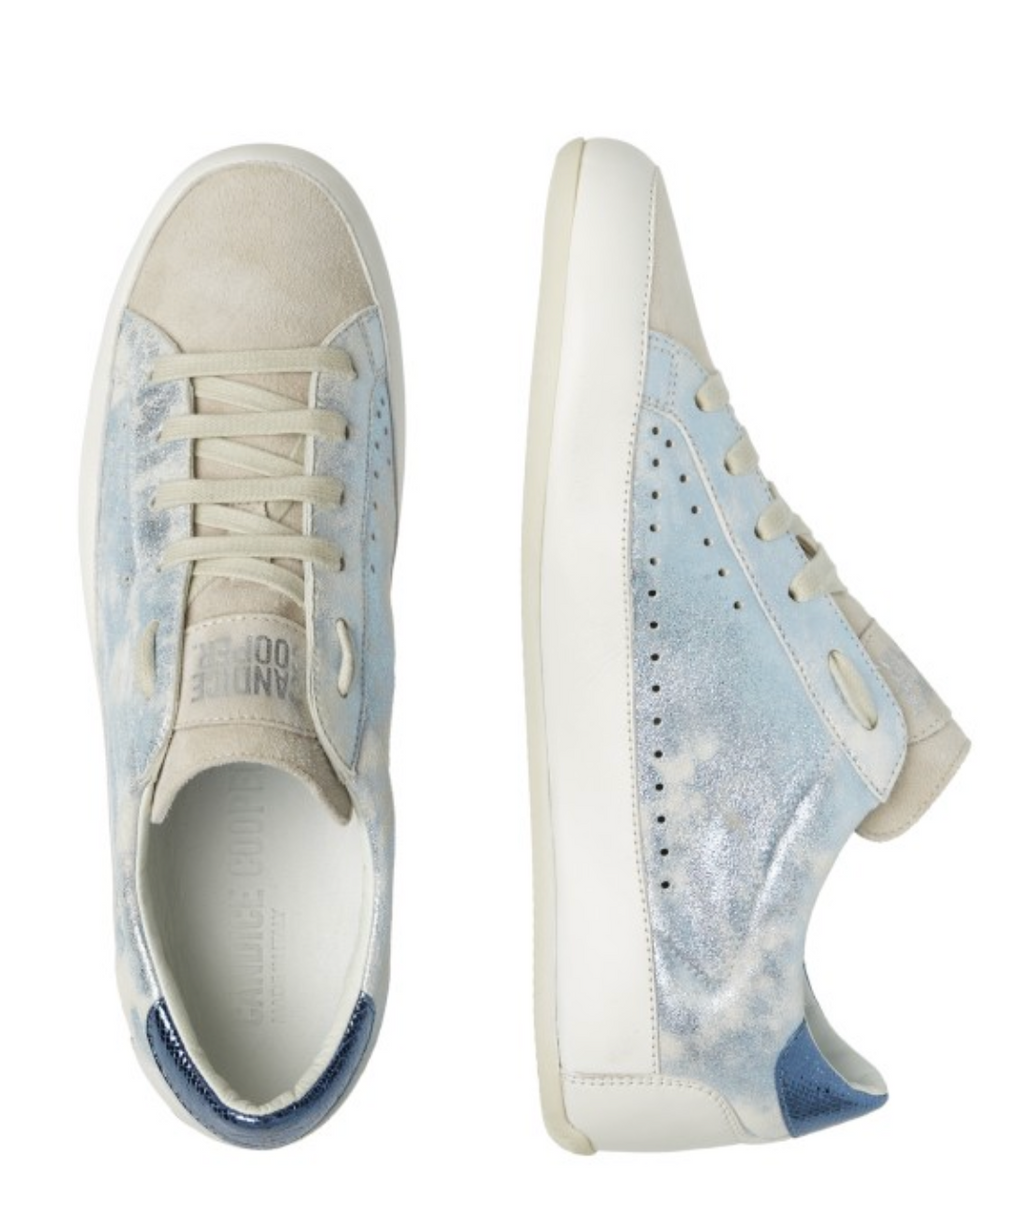 Hetre Alresford Hampshire Shoe Store Candice Cooper Metallic Blue Ice Dafne Sneaker